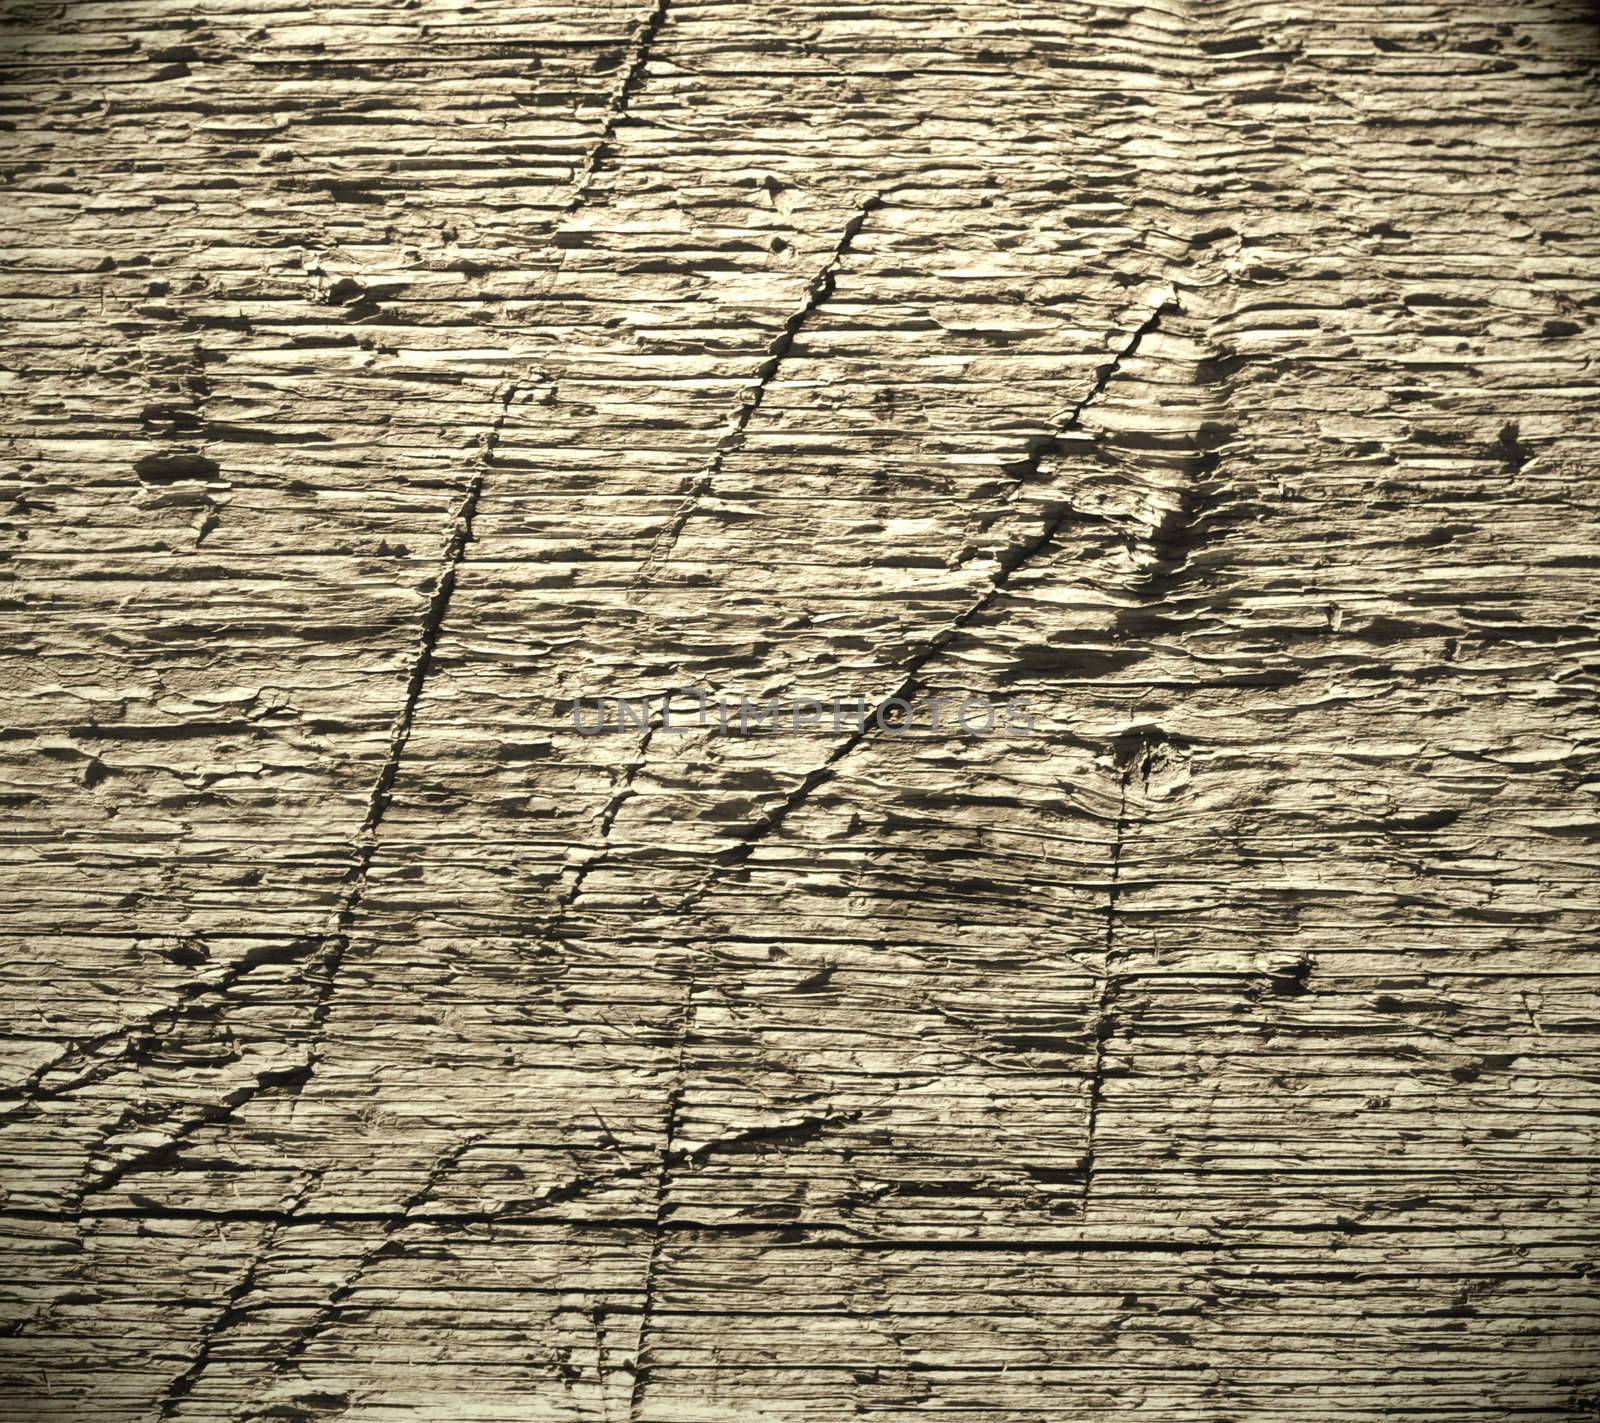 Wooden texture by schankz